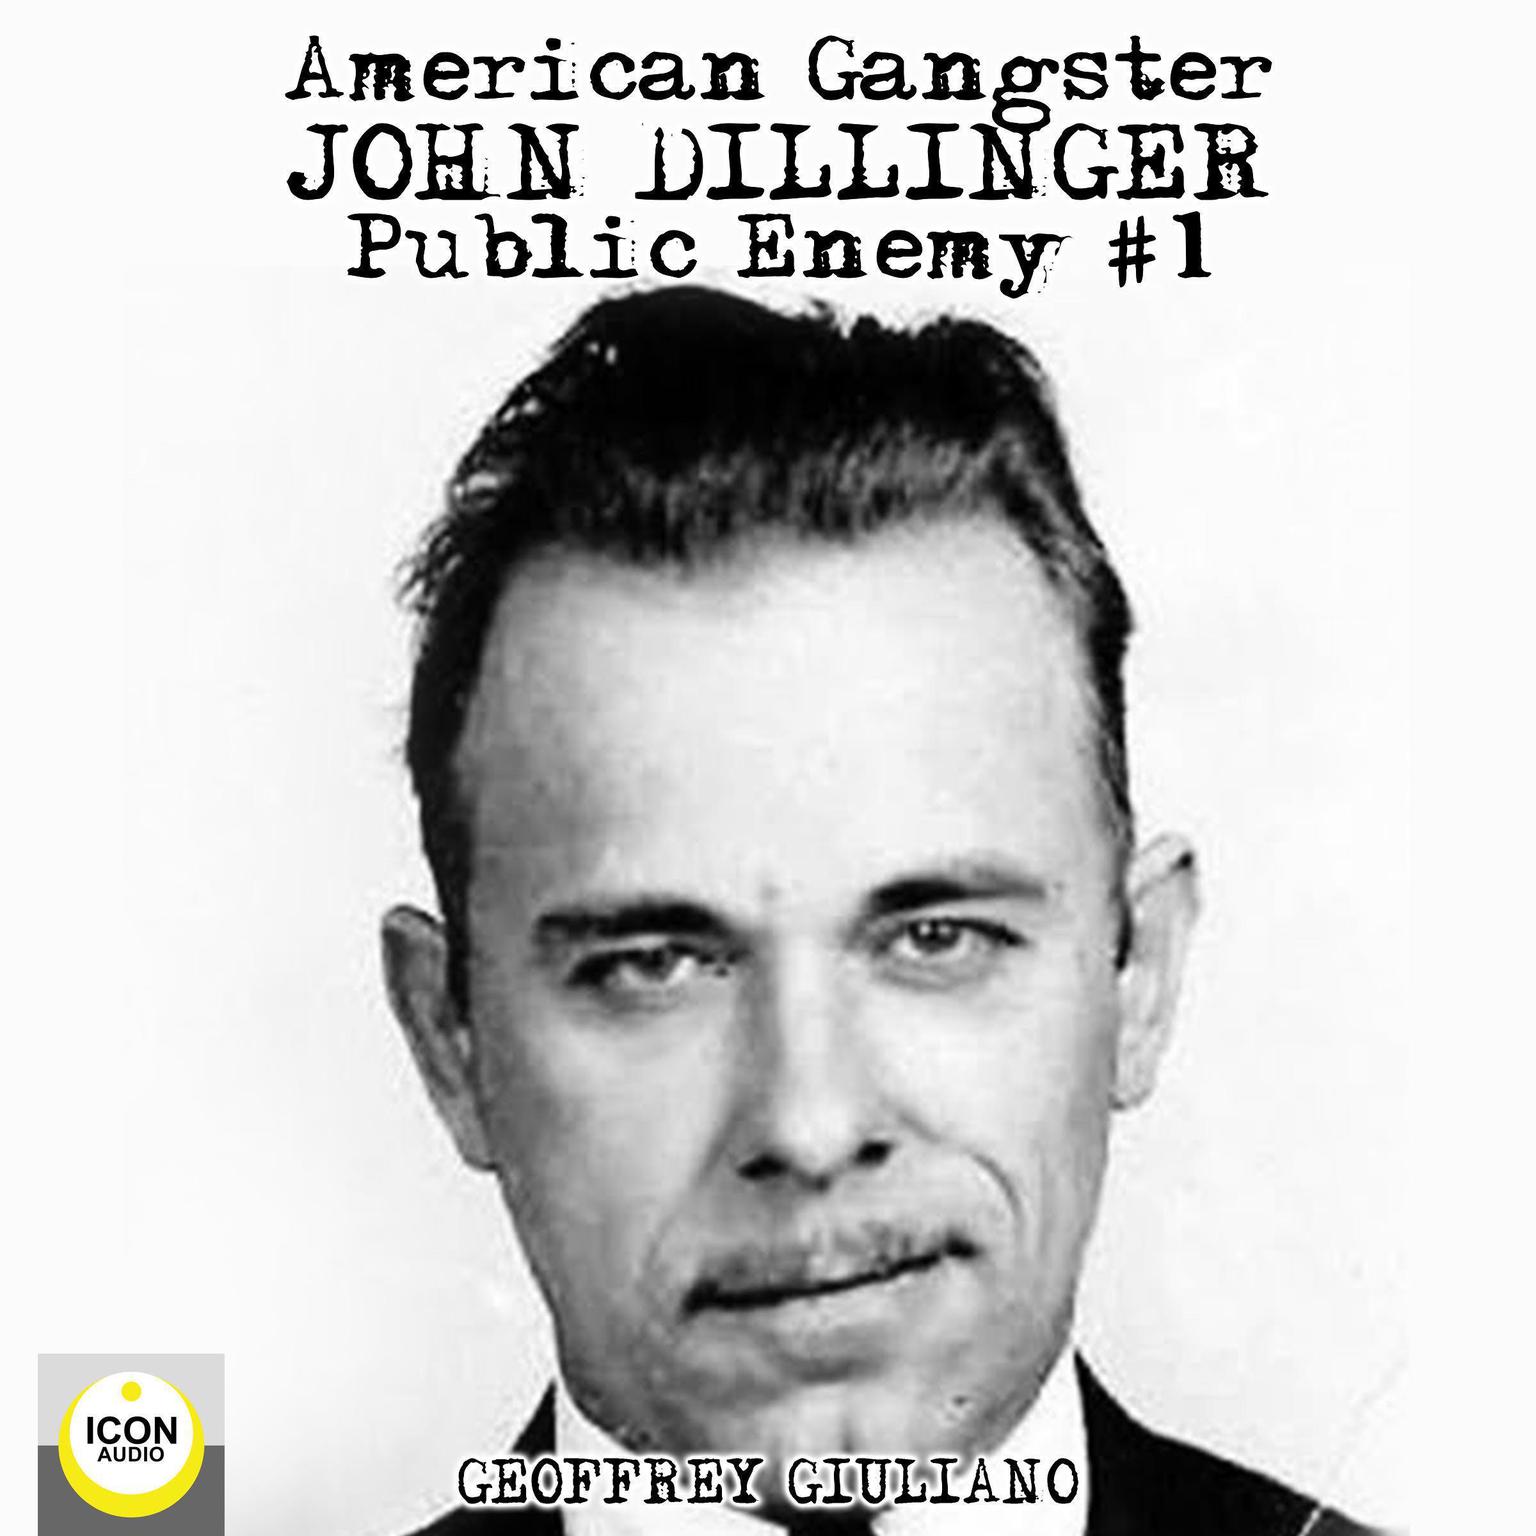 American Gangster; John Dillinger, Public Enemy #1 Audiobook, by Geoffrey Giuliano